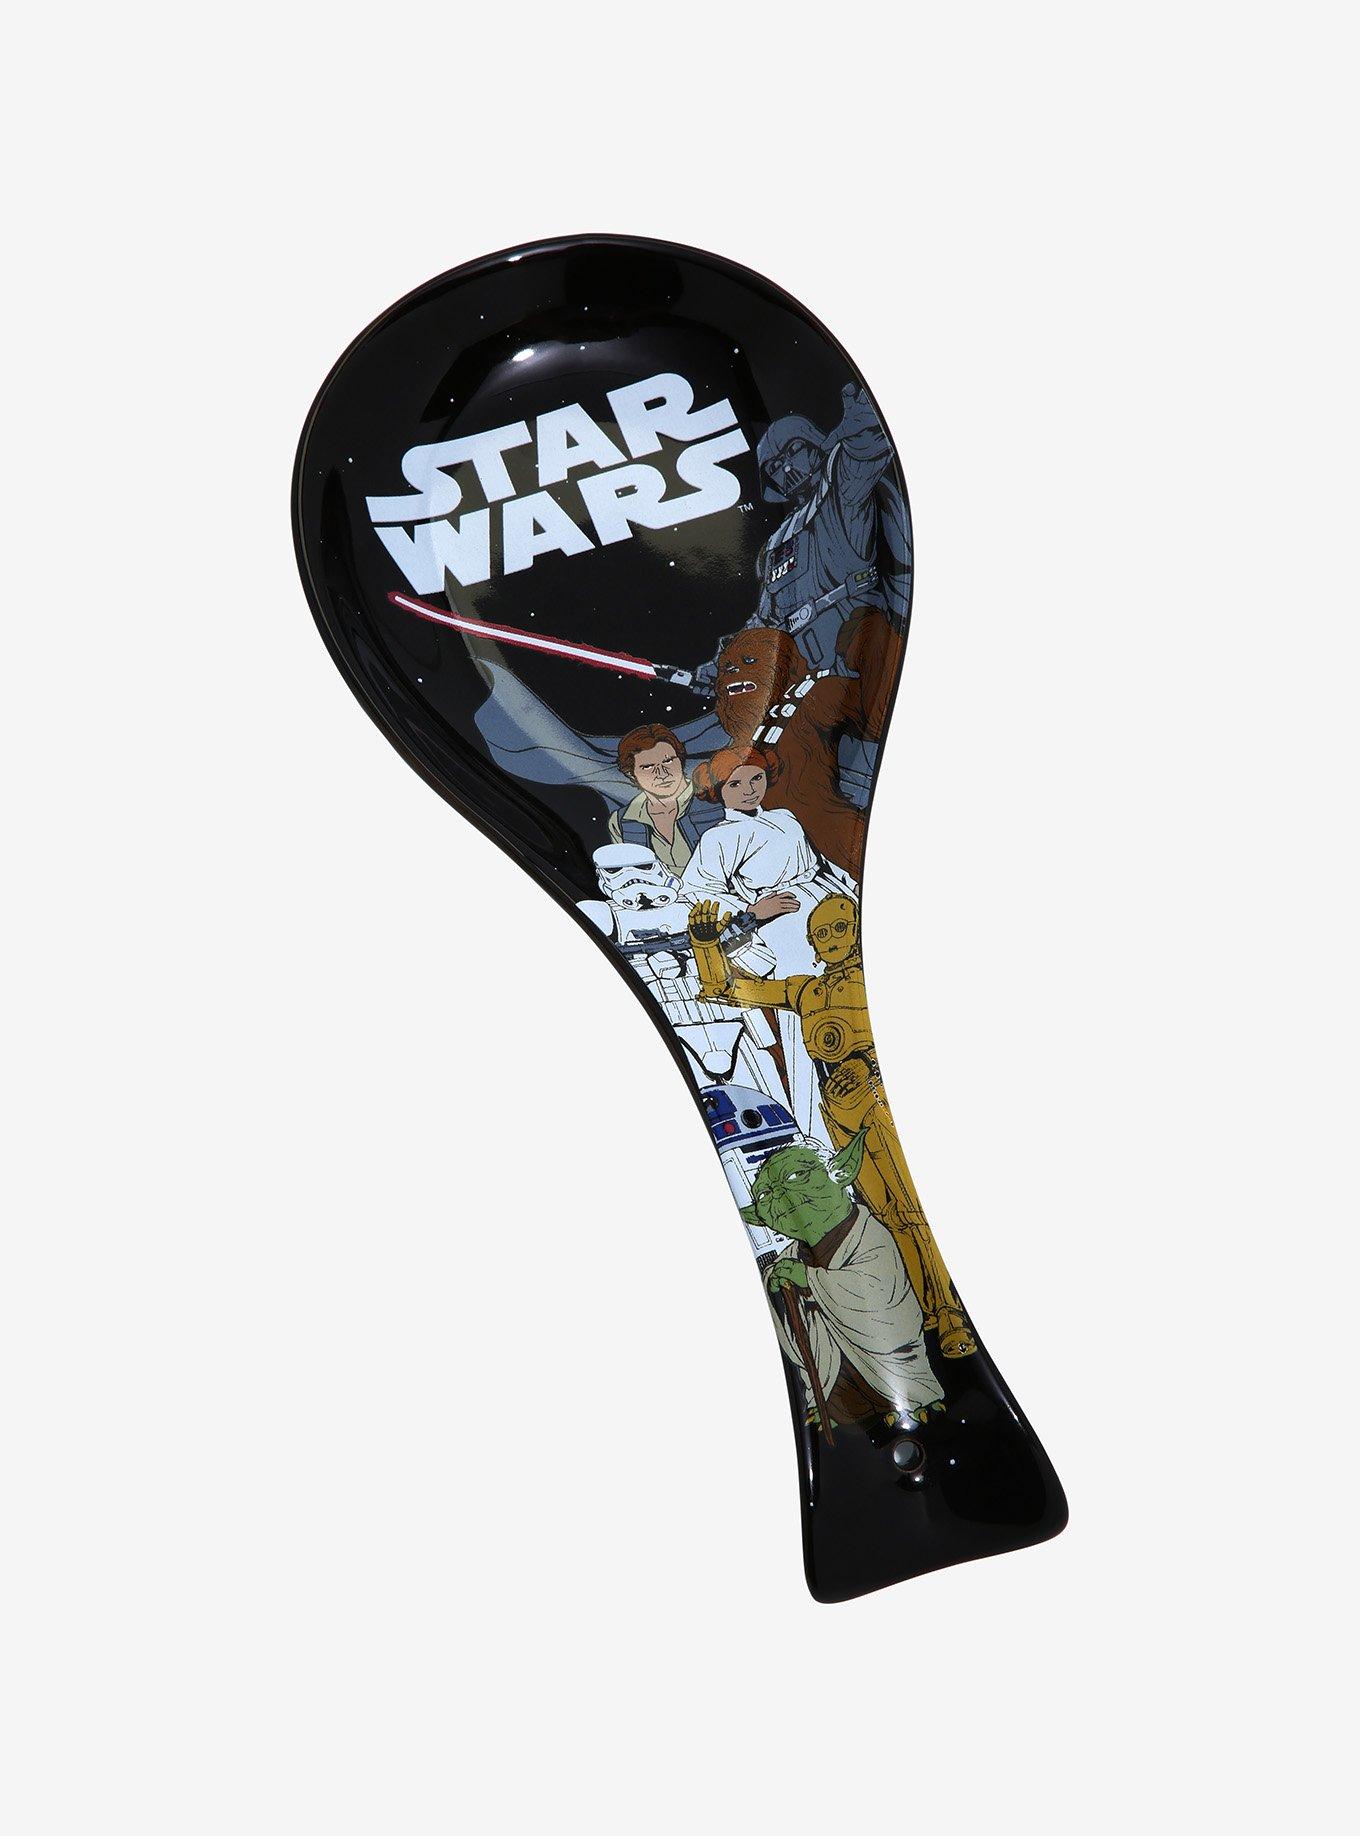 Star Wars Stormtrooper Spoon Rest -Brand New